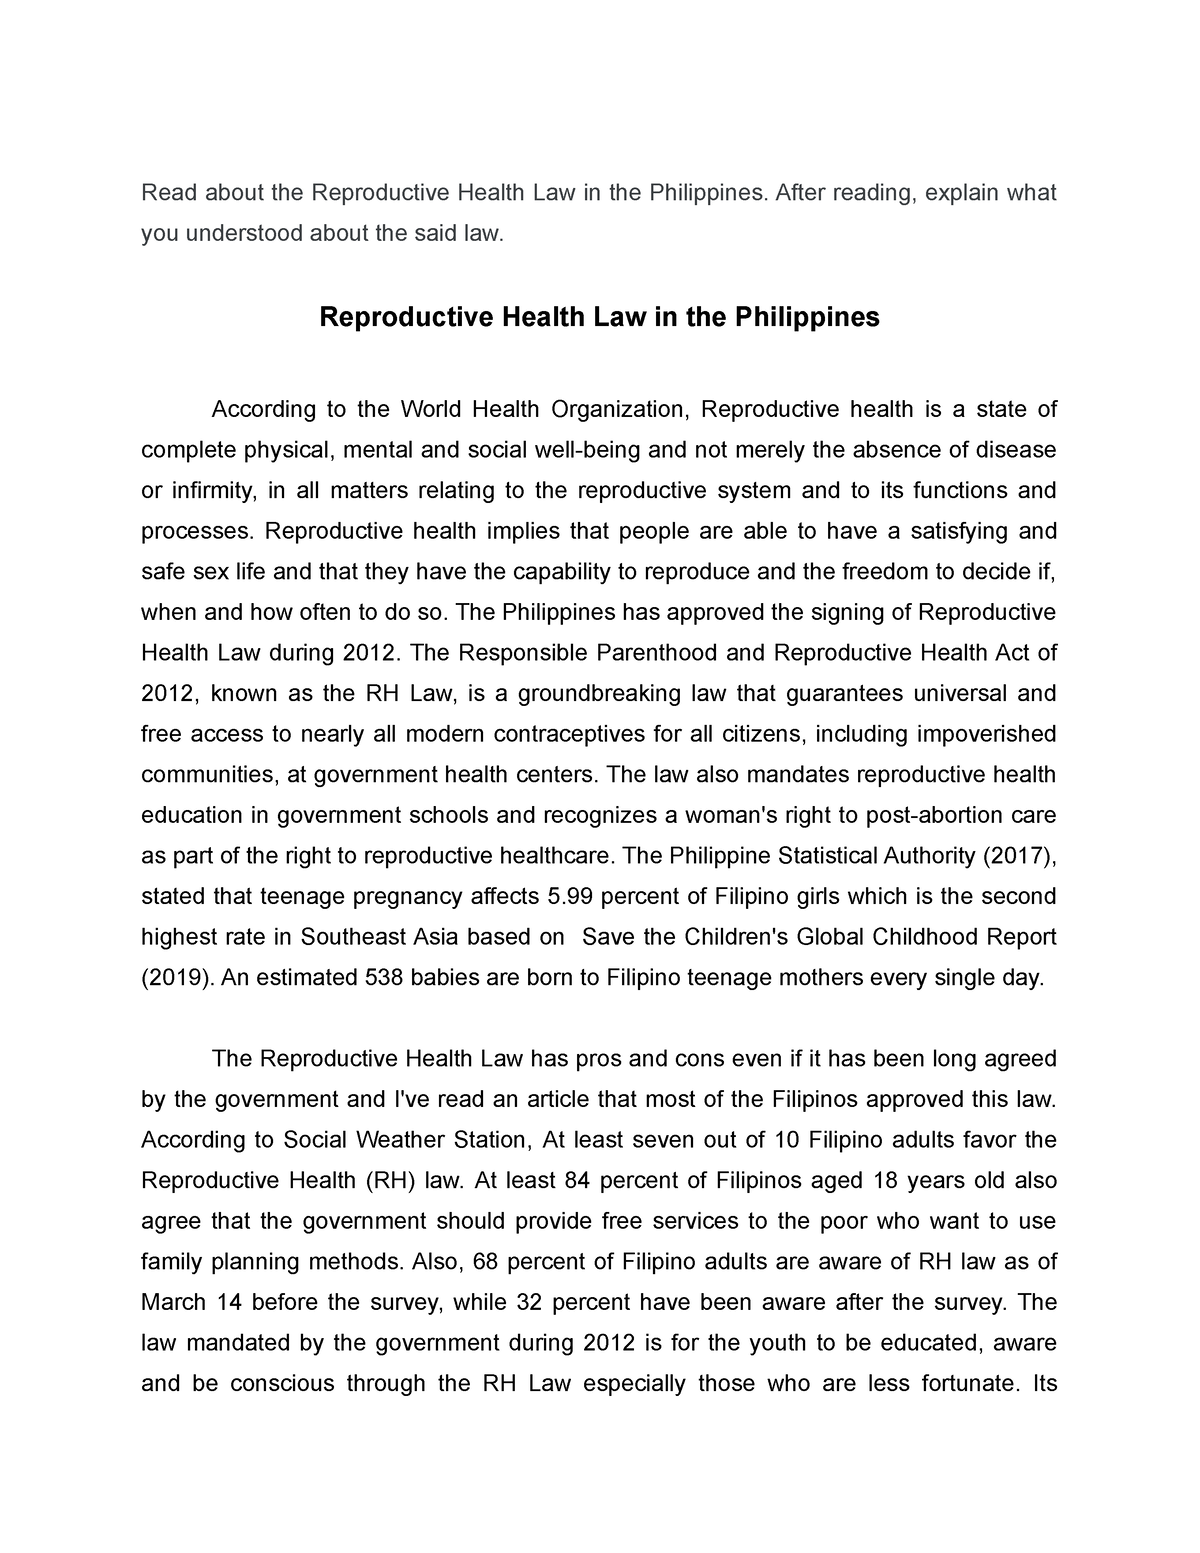 reproductive health law essay tagalog